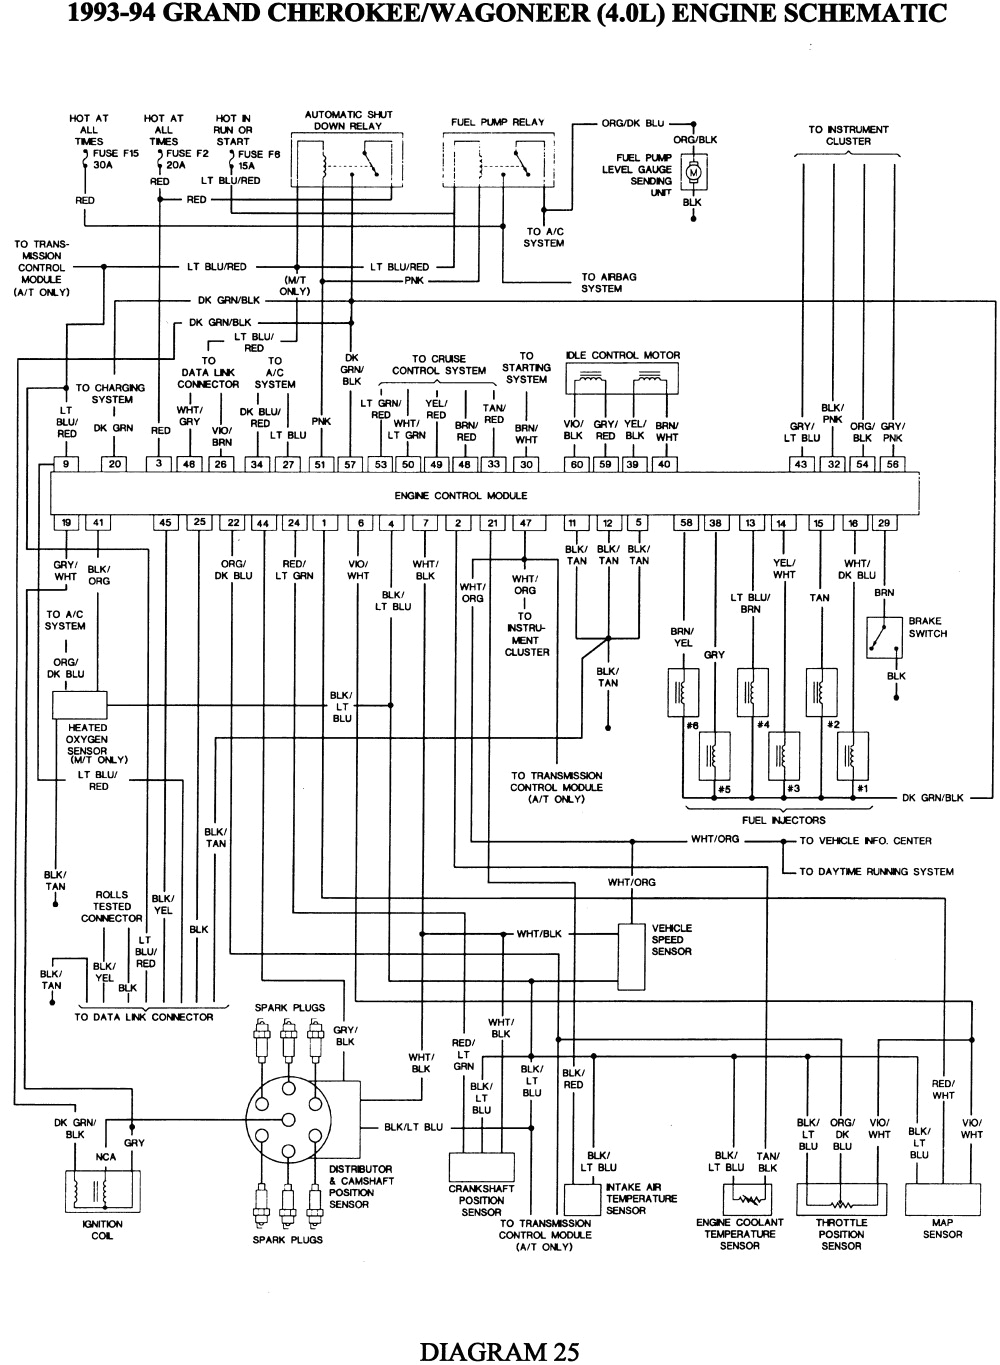 jeep grand cherokee engine wiring diagram wiring diagram rows keystone laredo wiring diagram laredo wiring diagram